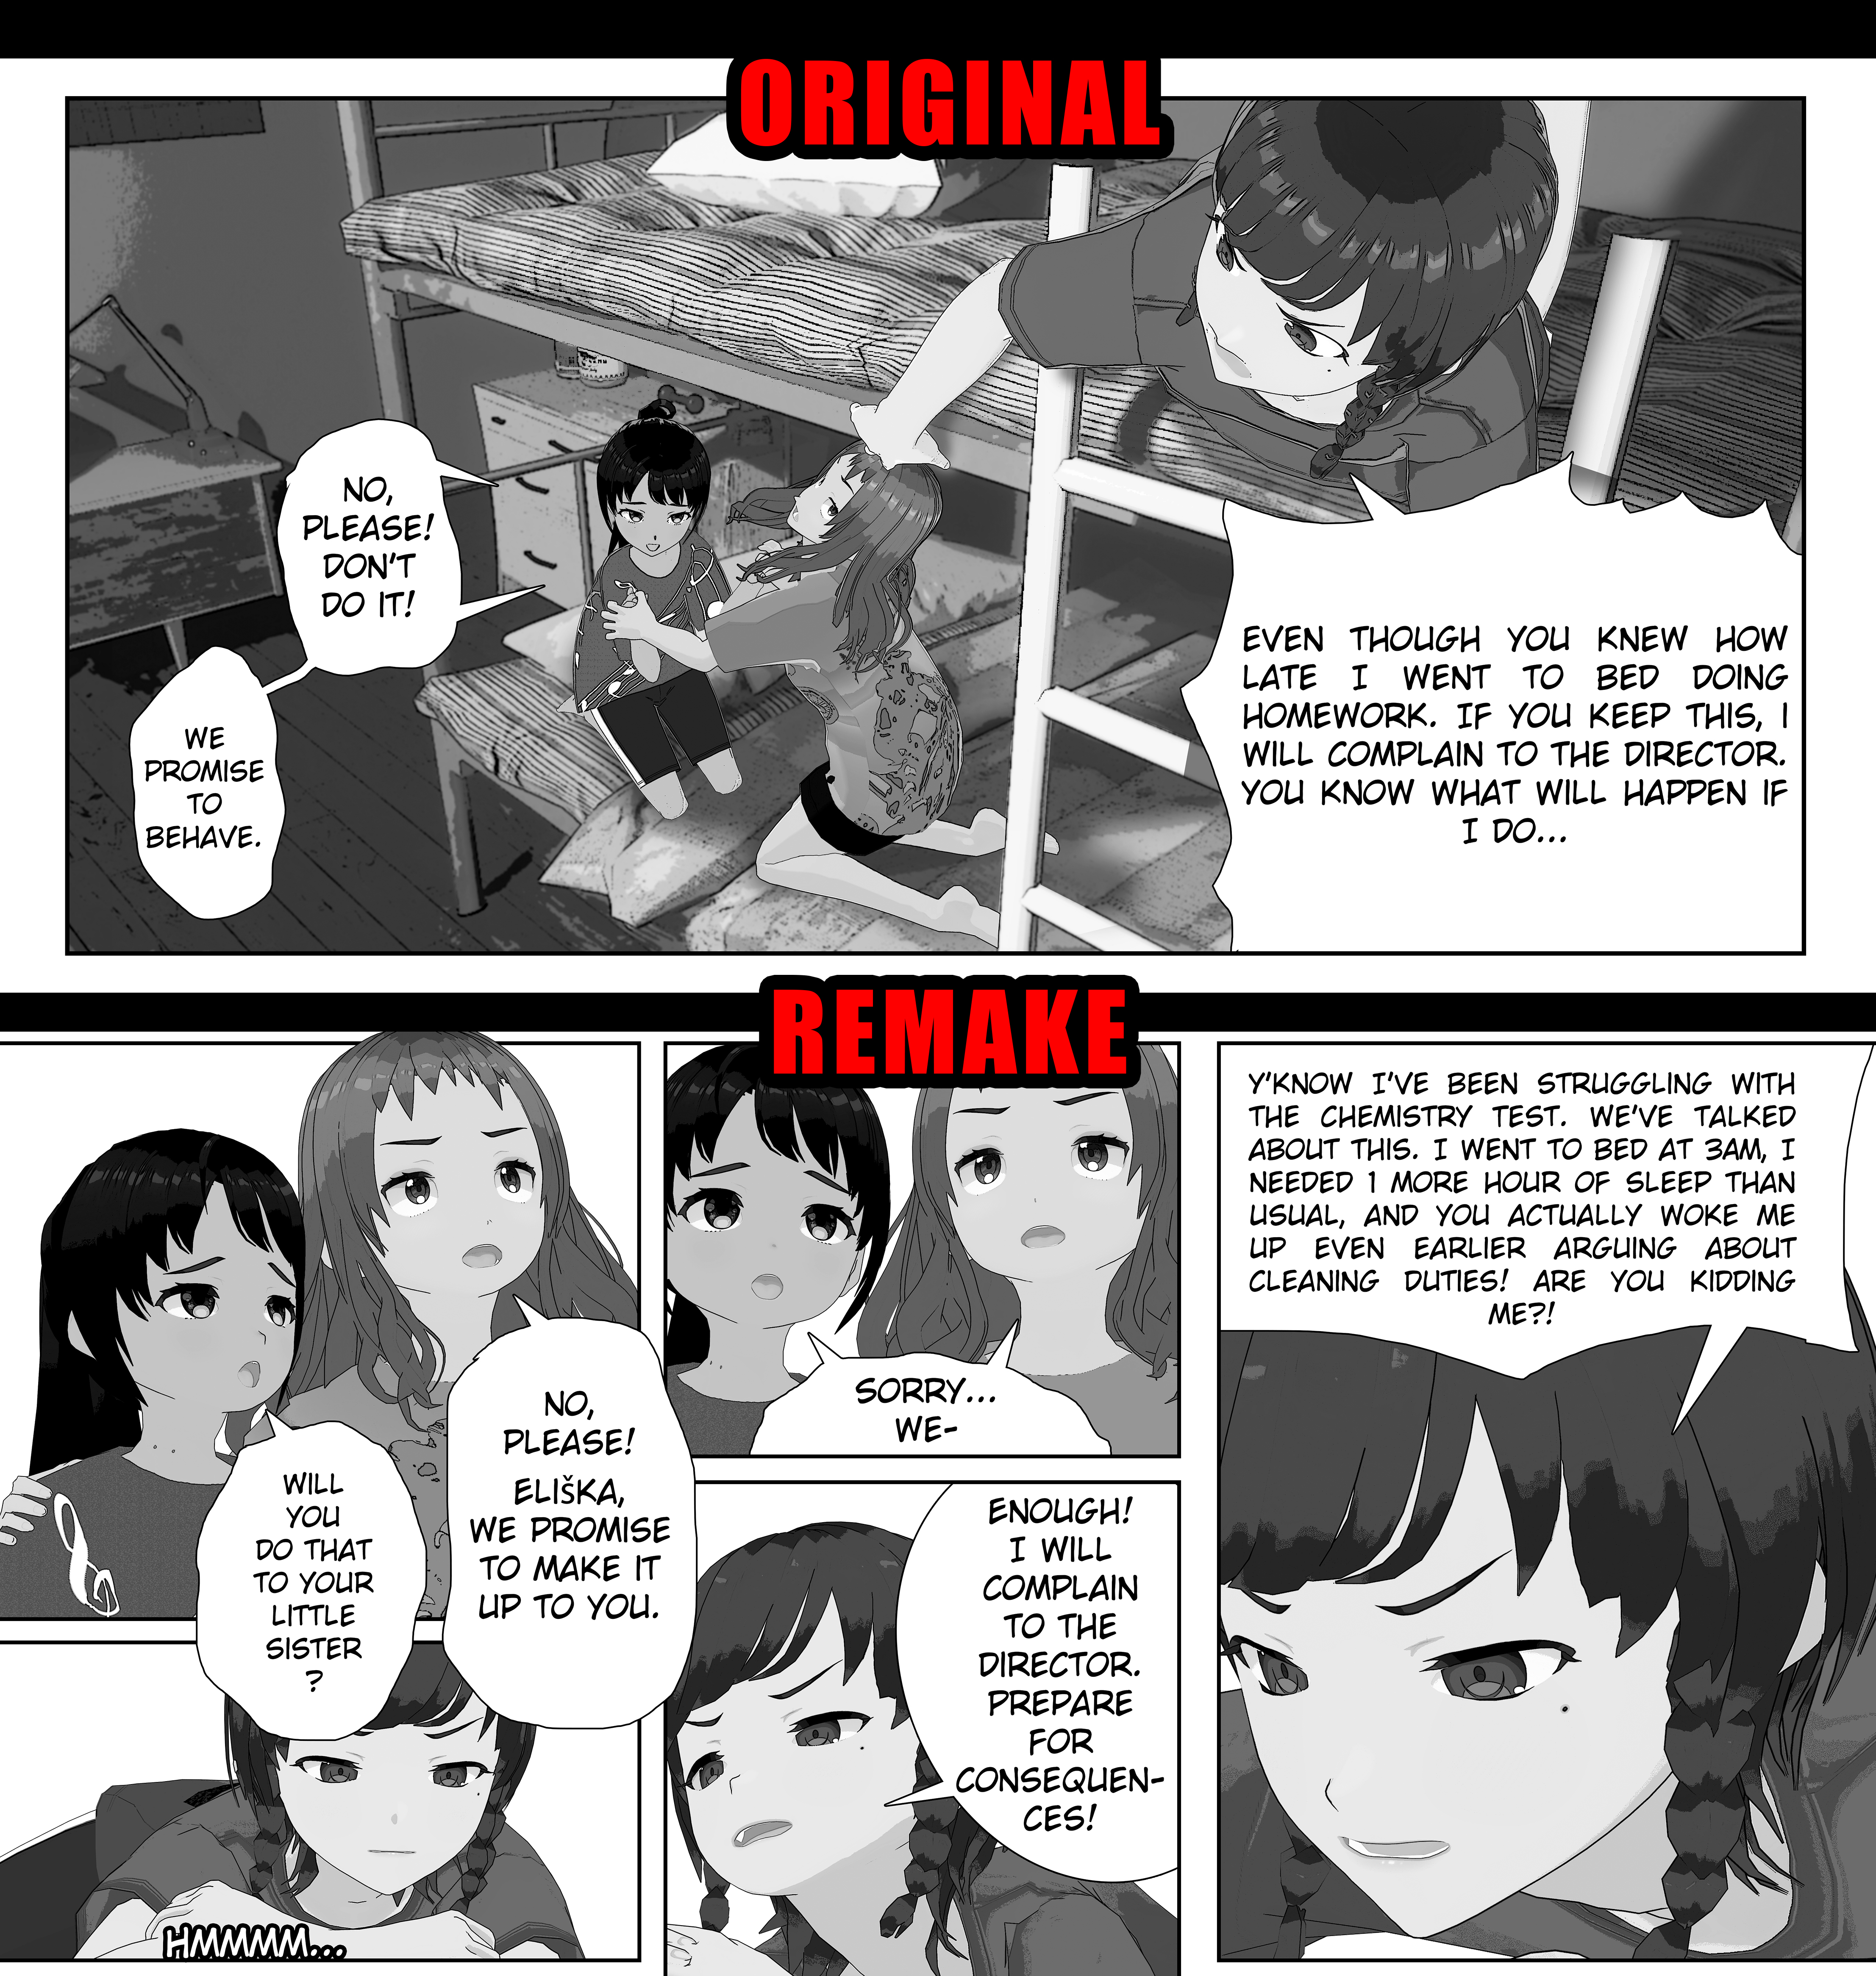 Nizu chapter 1 Original vs Remake